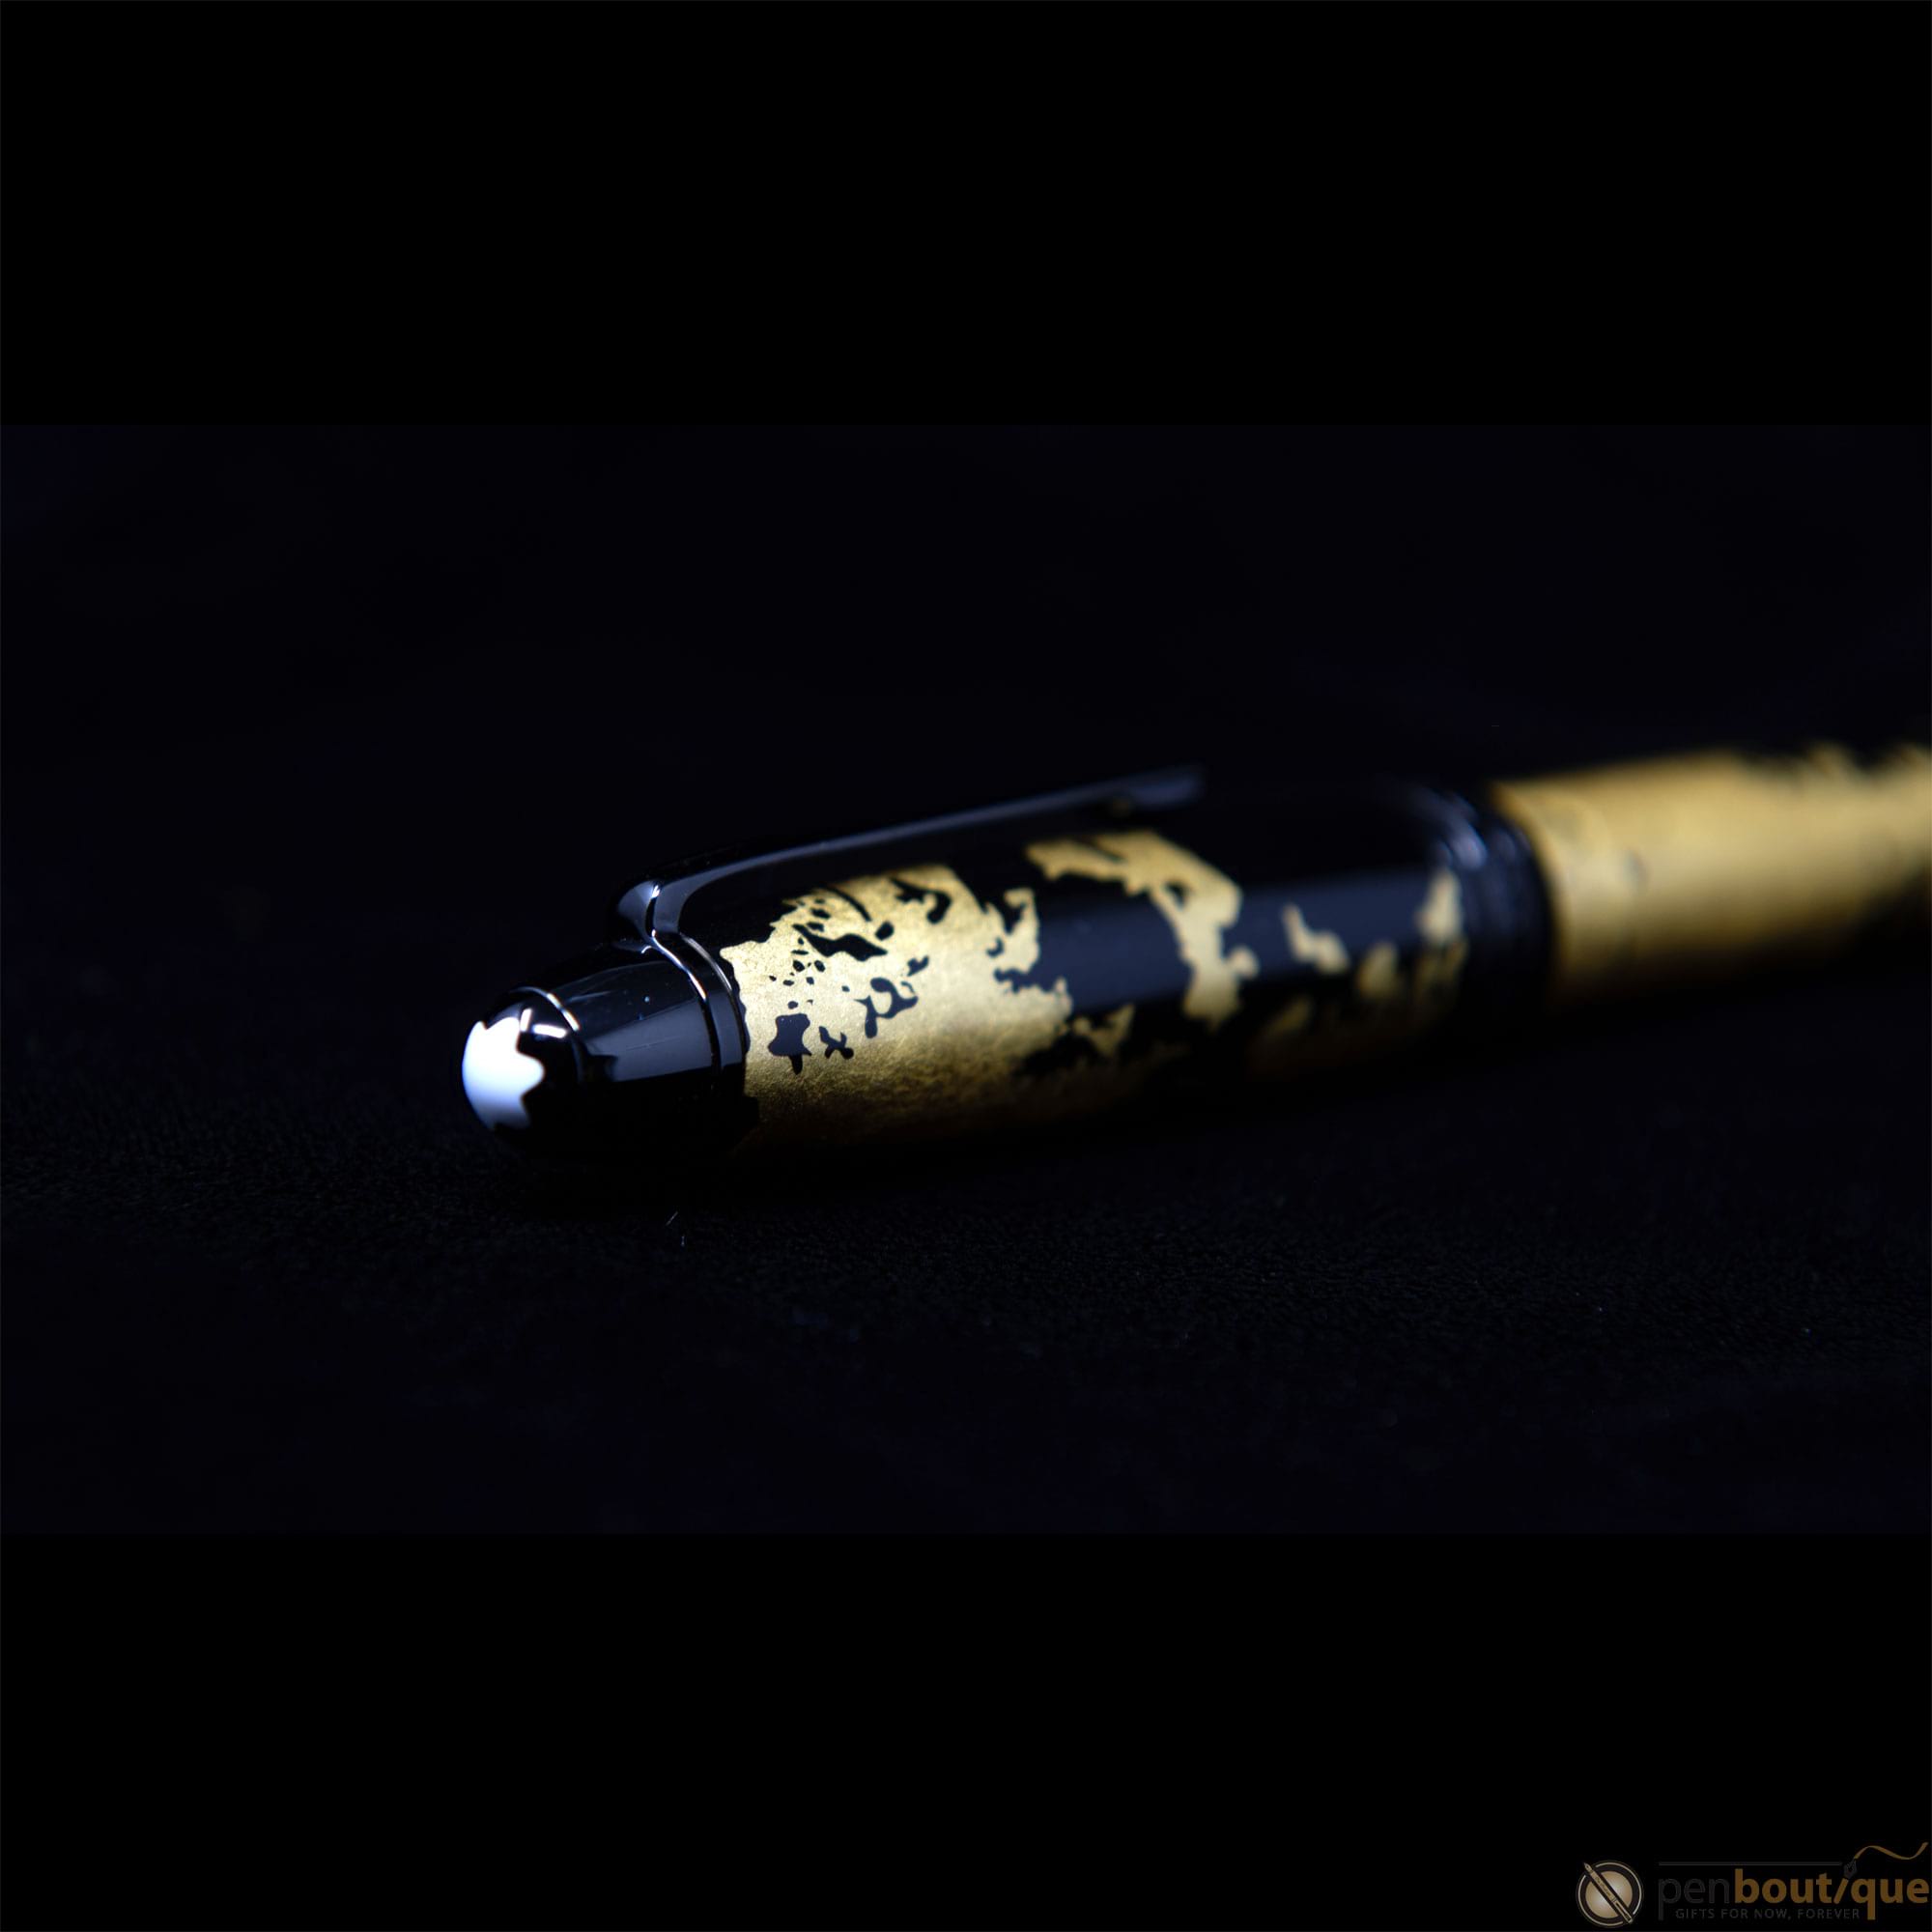 Meisterstück Solitaire Calligraphy Gold Leaf Flex Nib Fountain Pen - Luxury  Fountain pens – Montblanc® US